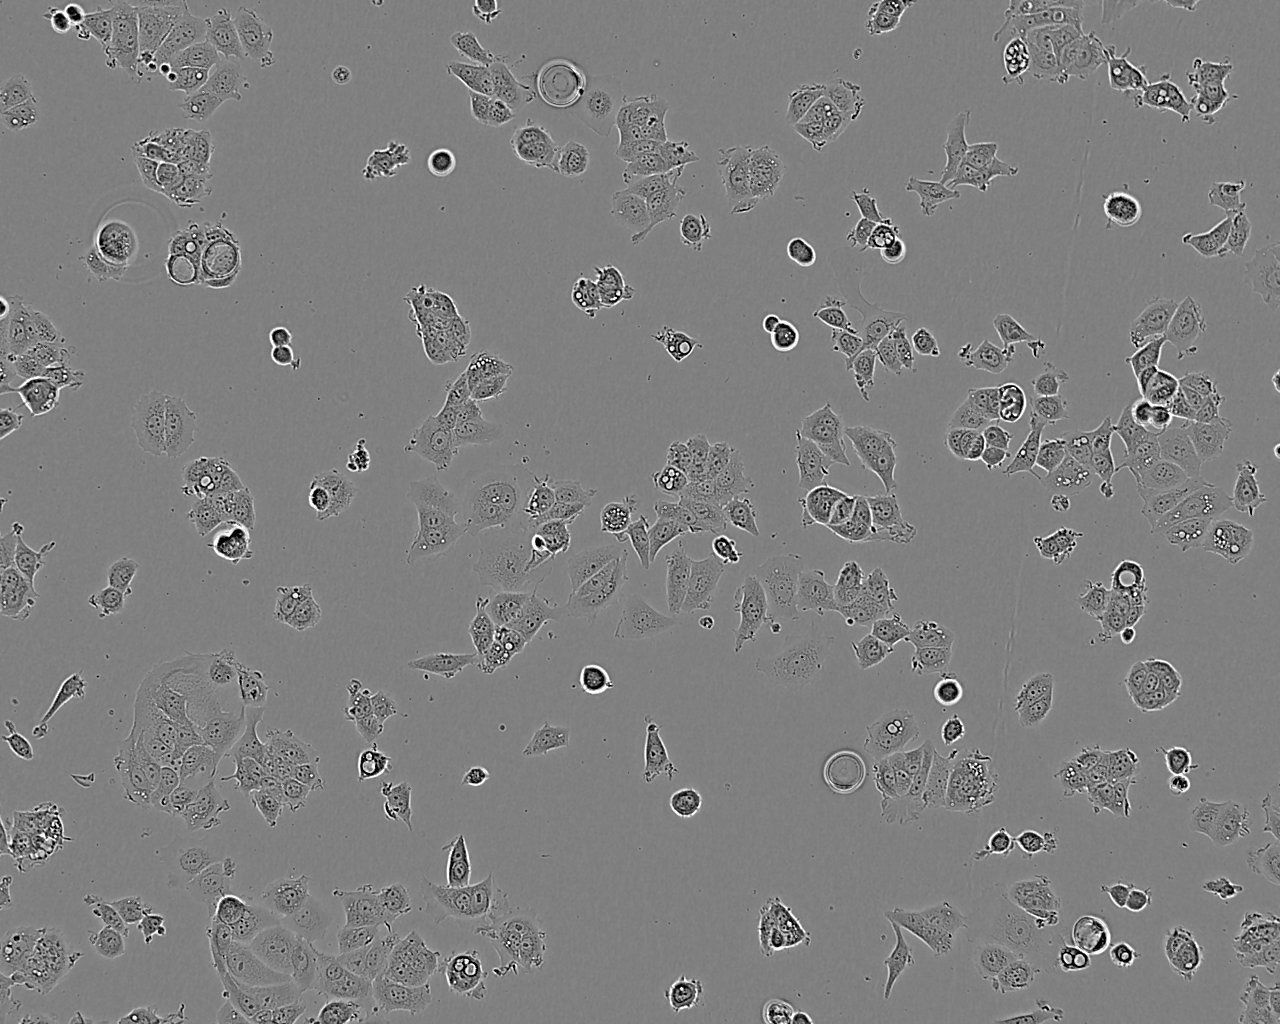 M20 [Human melanoma] epithelioid cells人胚胎皮肤细胞系